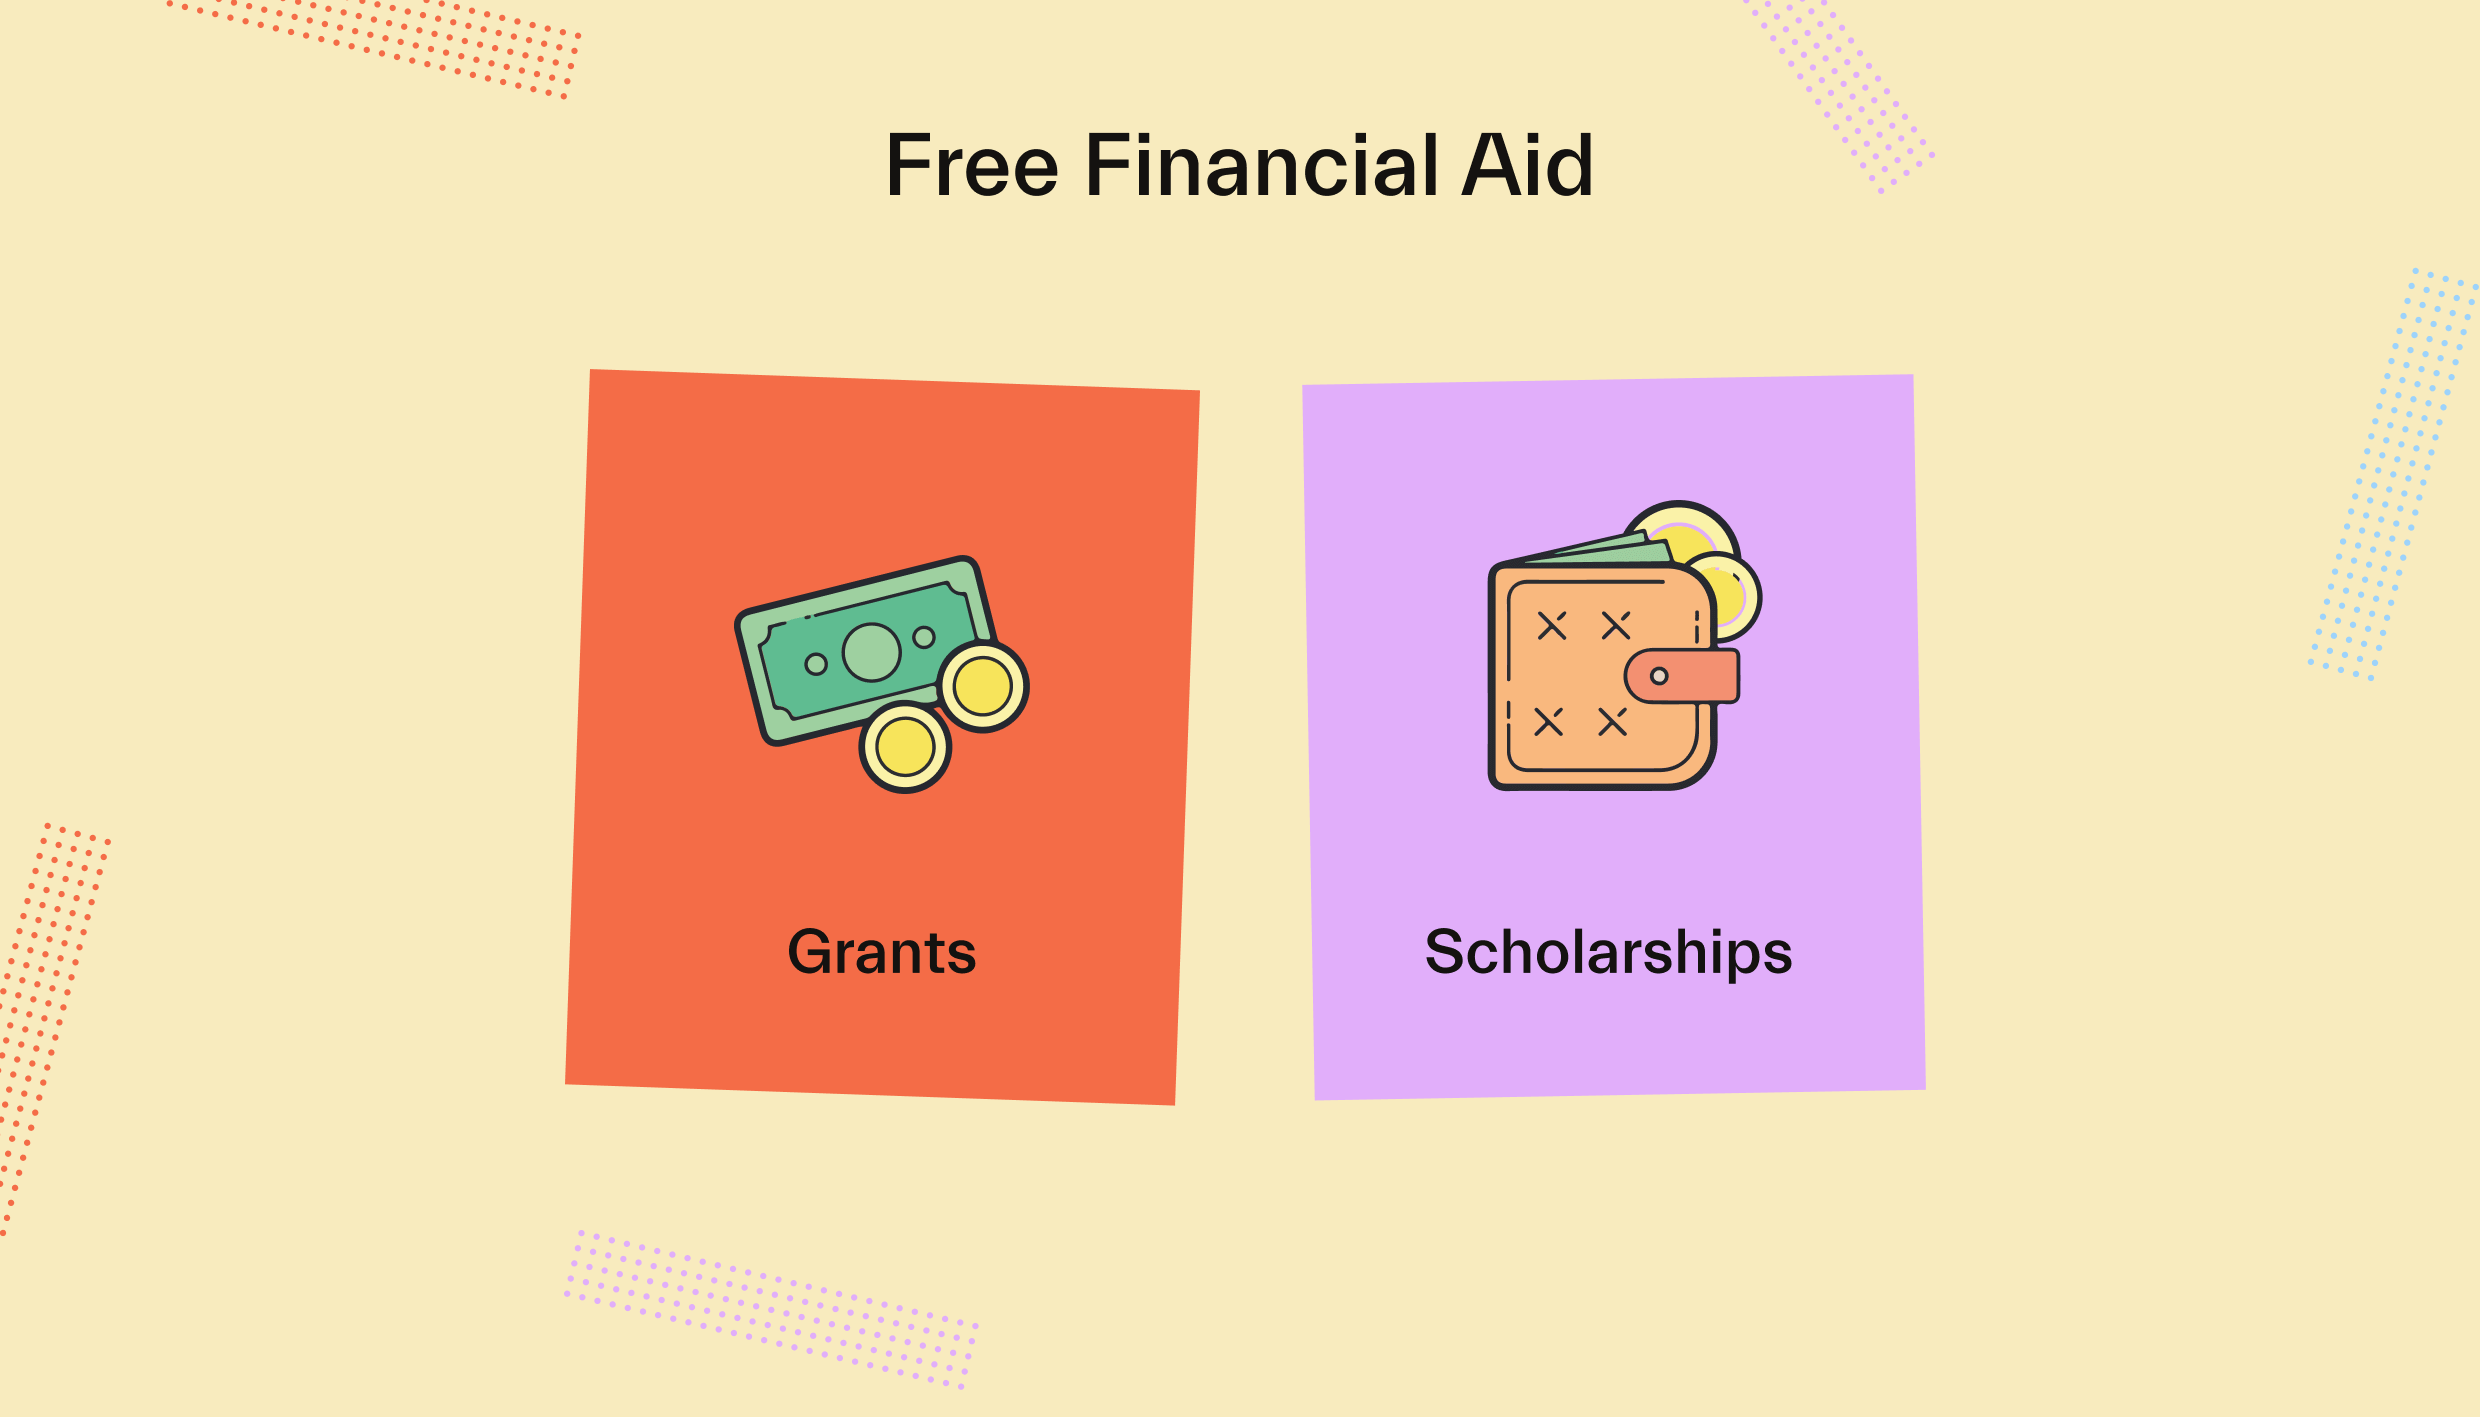 Free financial aid